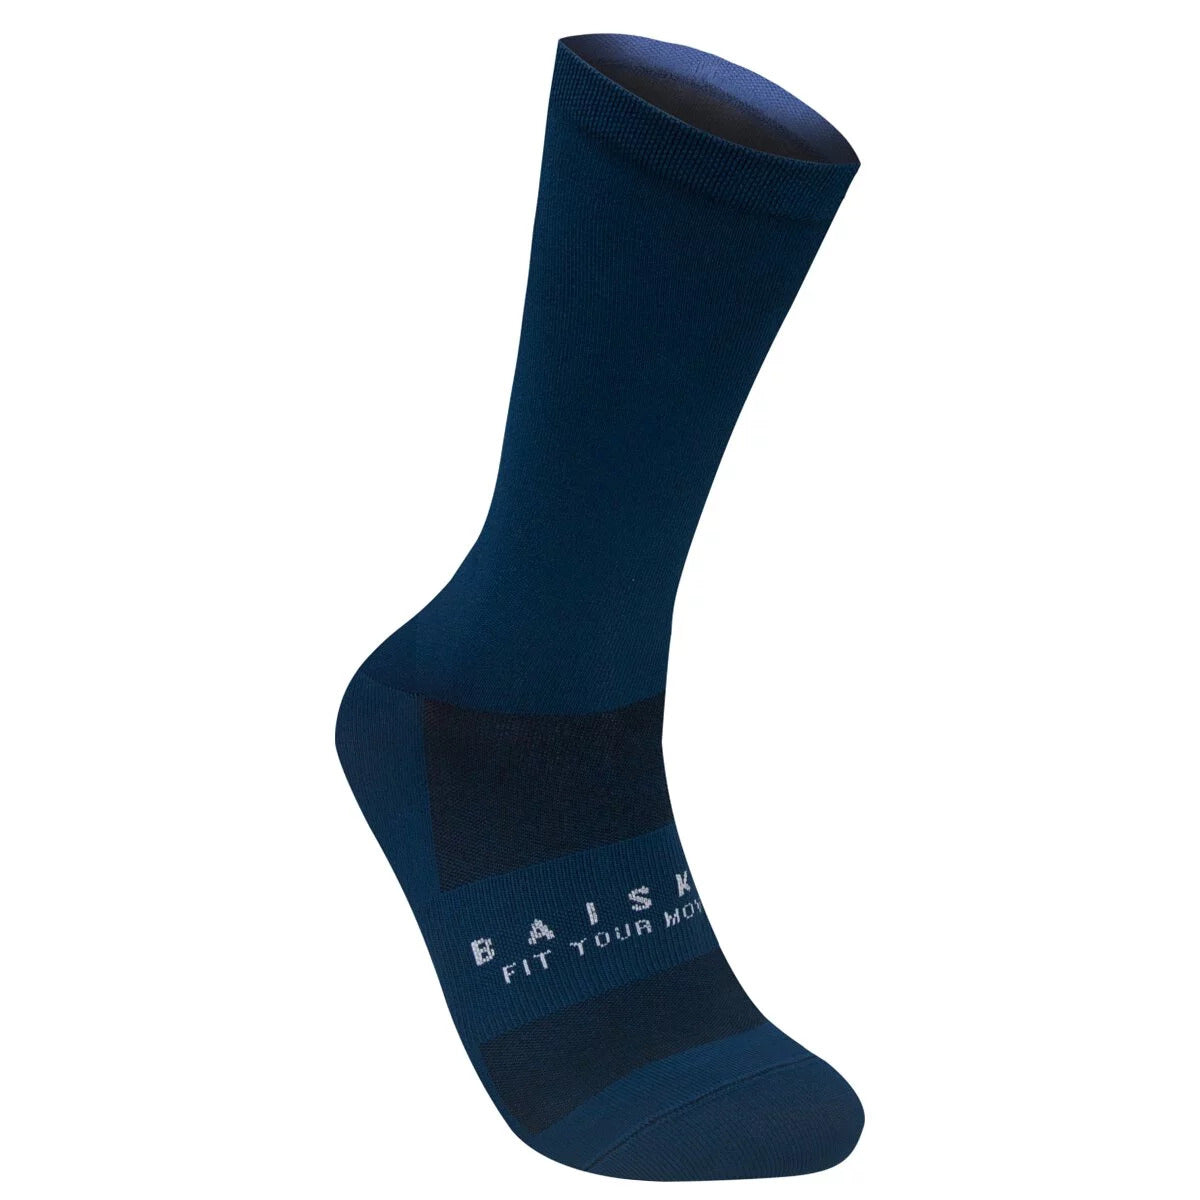 Baisky Premium Cycling Socks - TRSS129 Purity Dark Blue